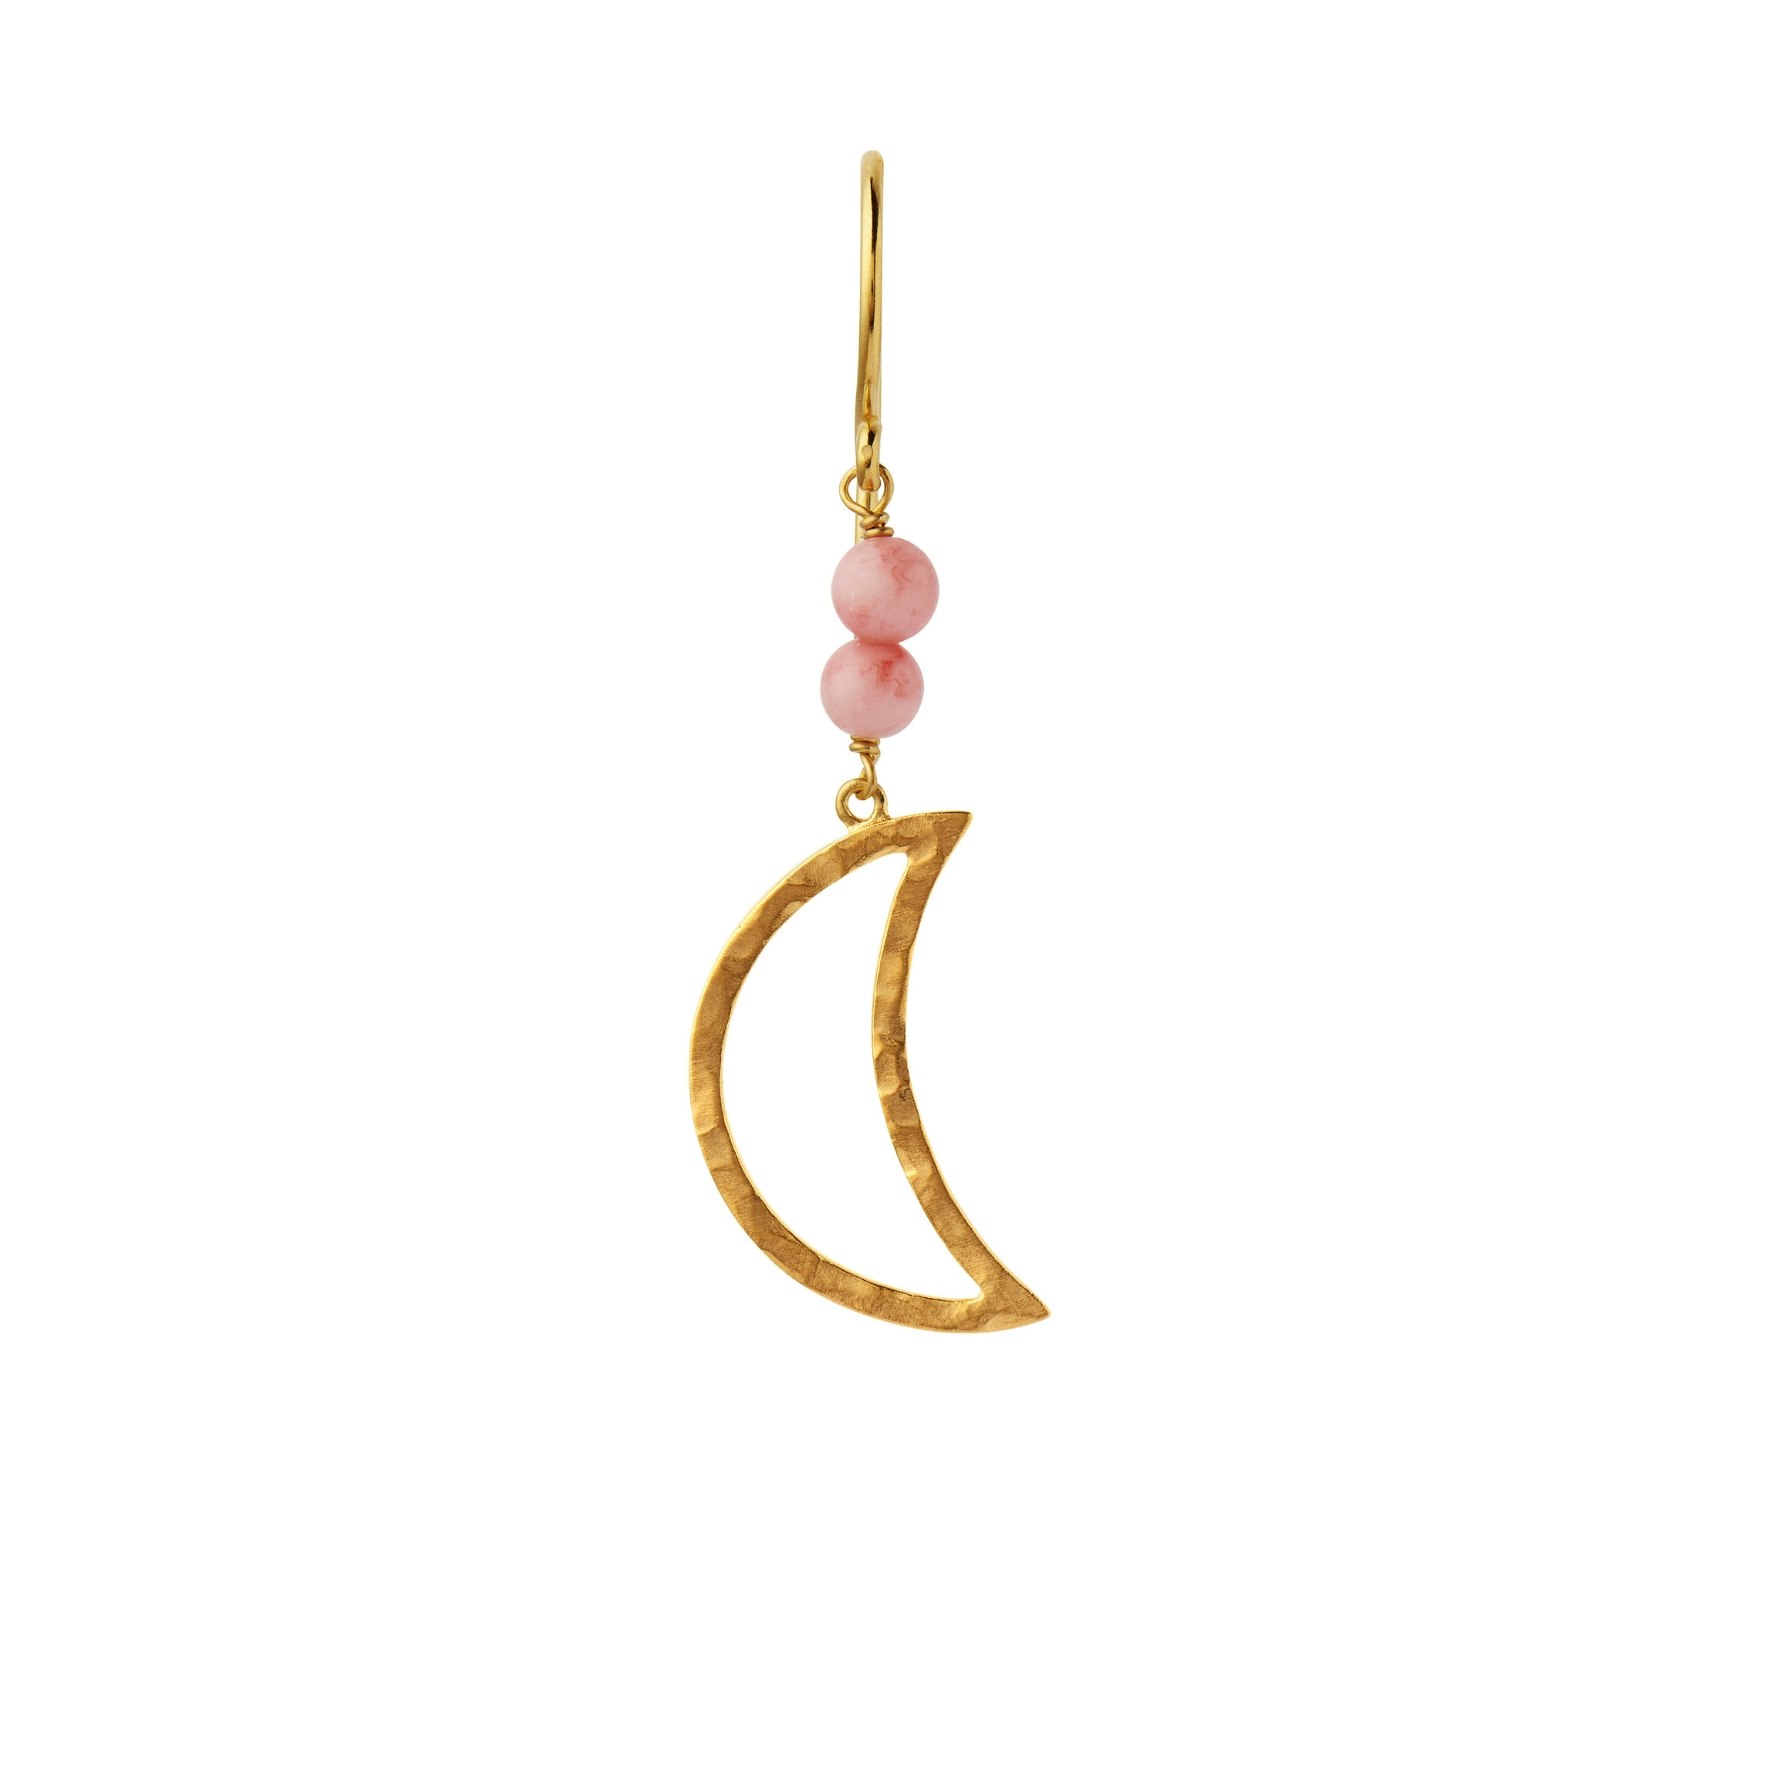 Big Bella Moon Earring Coral von STINE A Jewelry in Vergoldet-Silber Sterling 925